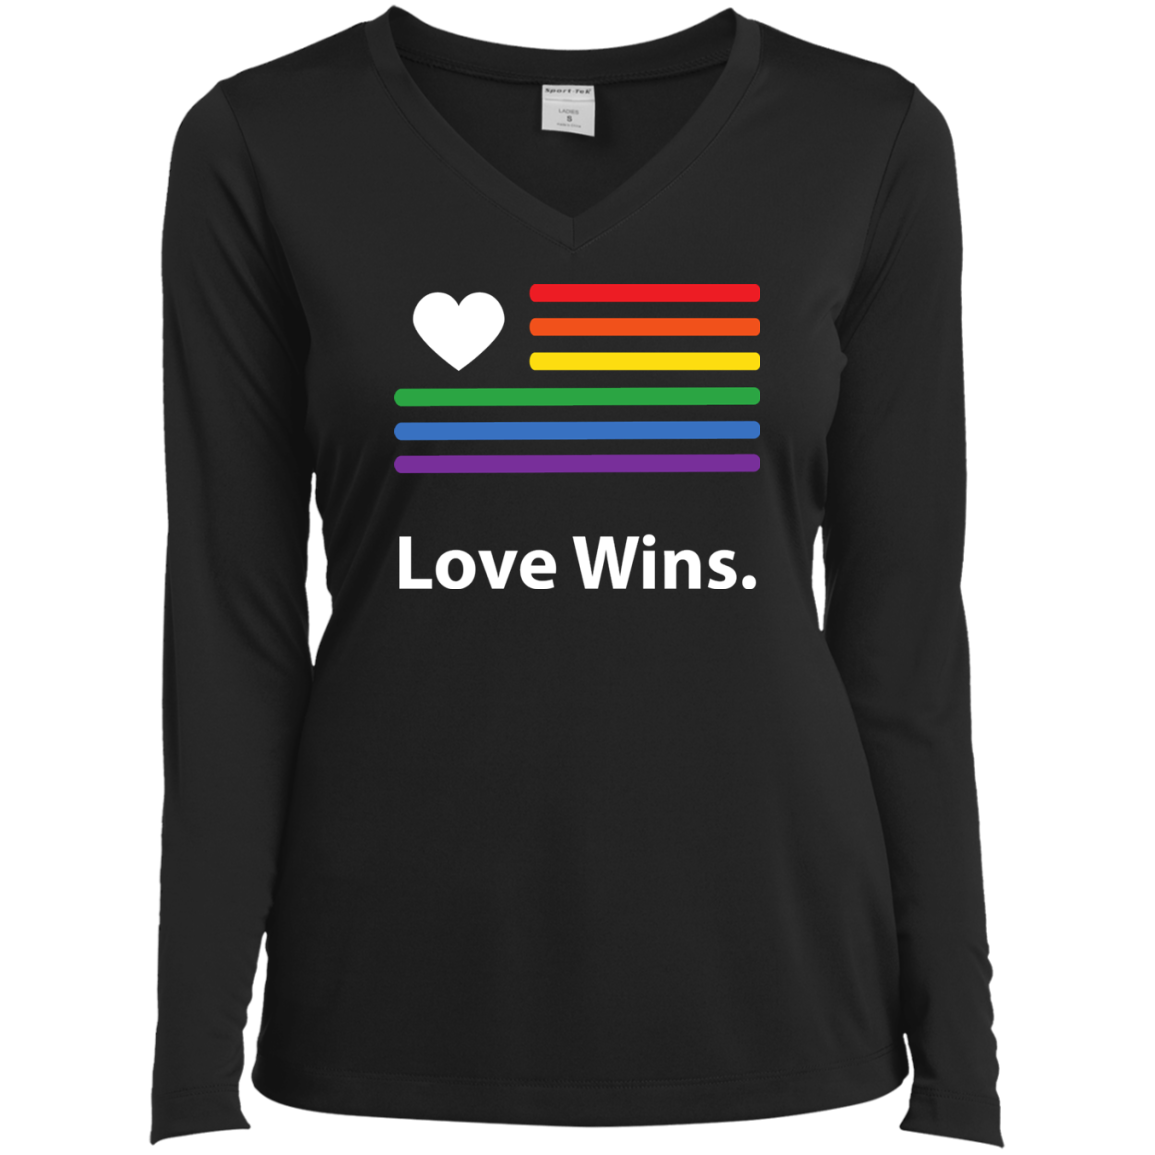 "LGBT Flag Love Wins" LGBT Pride Black full Sleeves Round tshirt for women